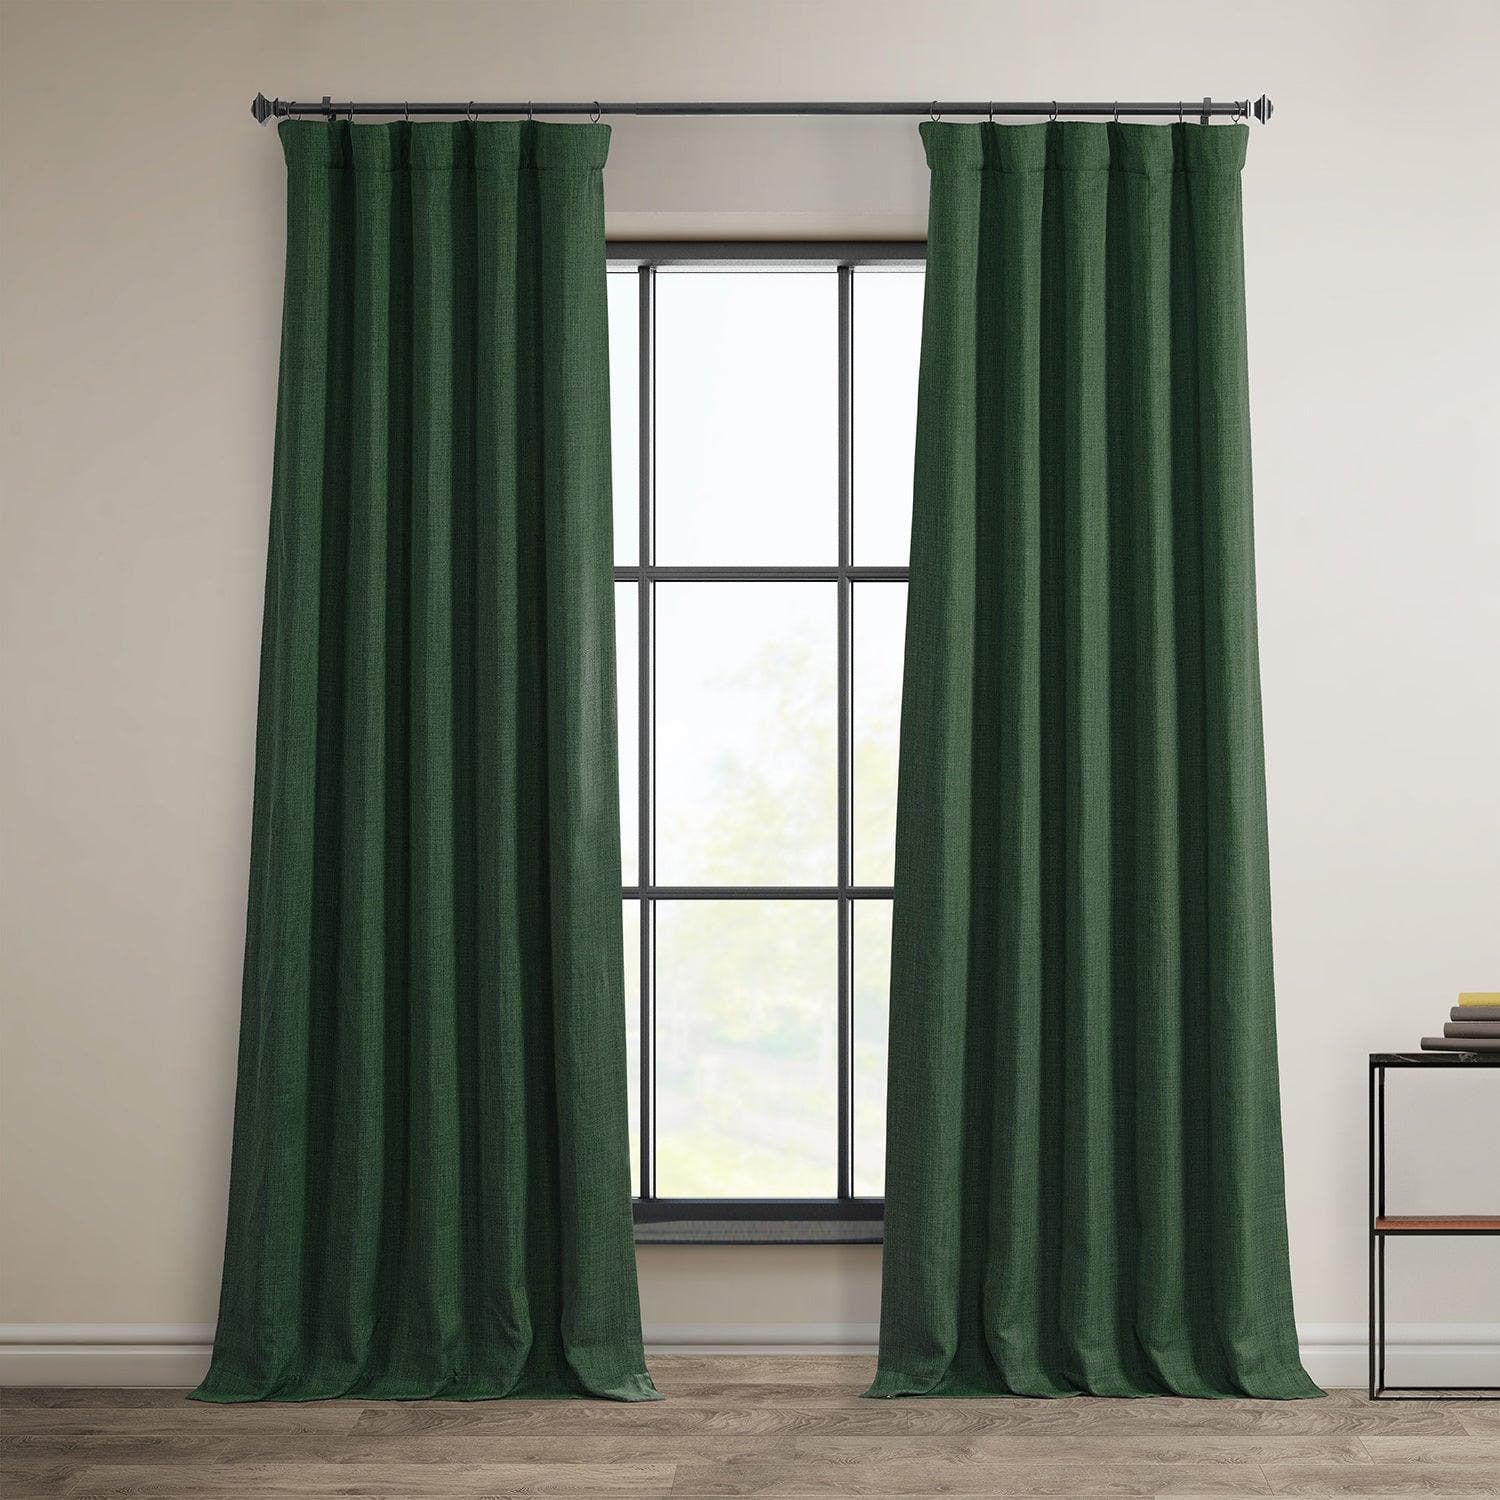 Key Green Textured Faux Linen Room Darkening Curtain